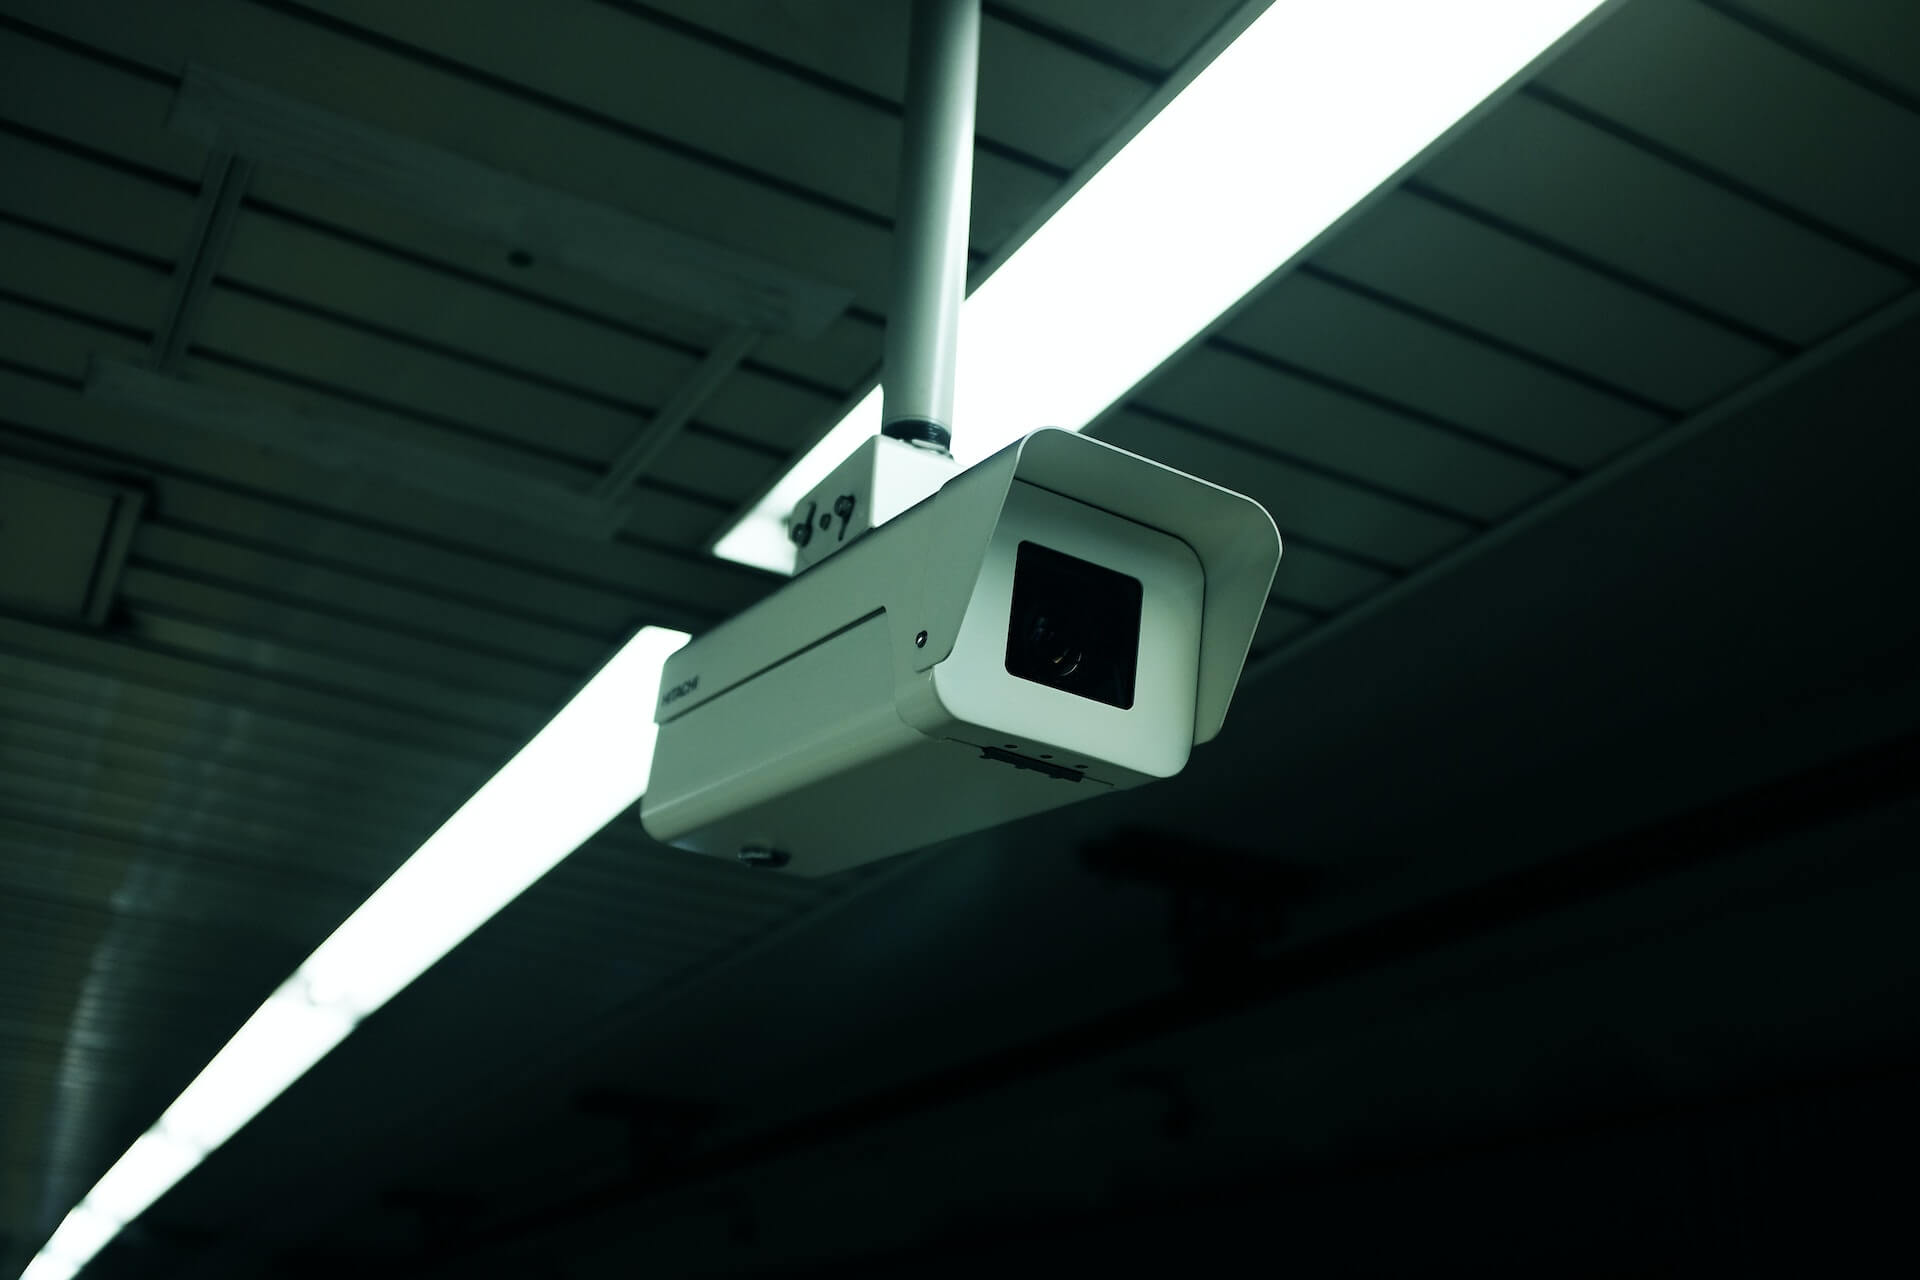 facility with surveillance cameras